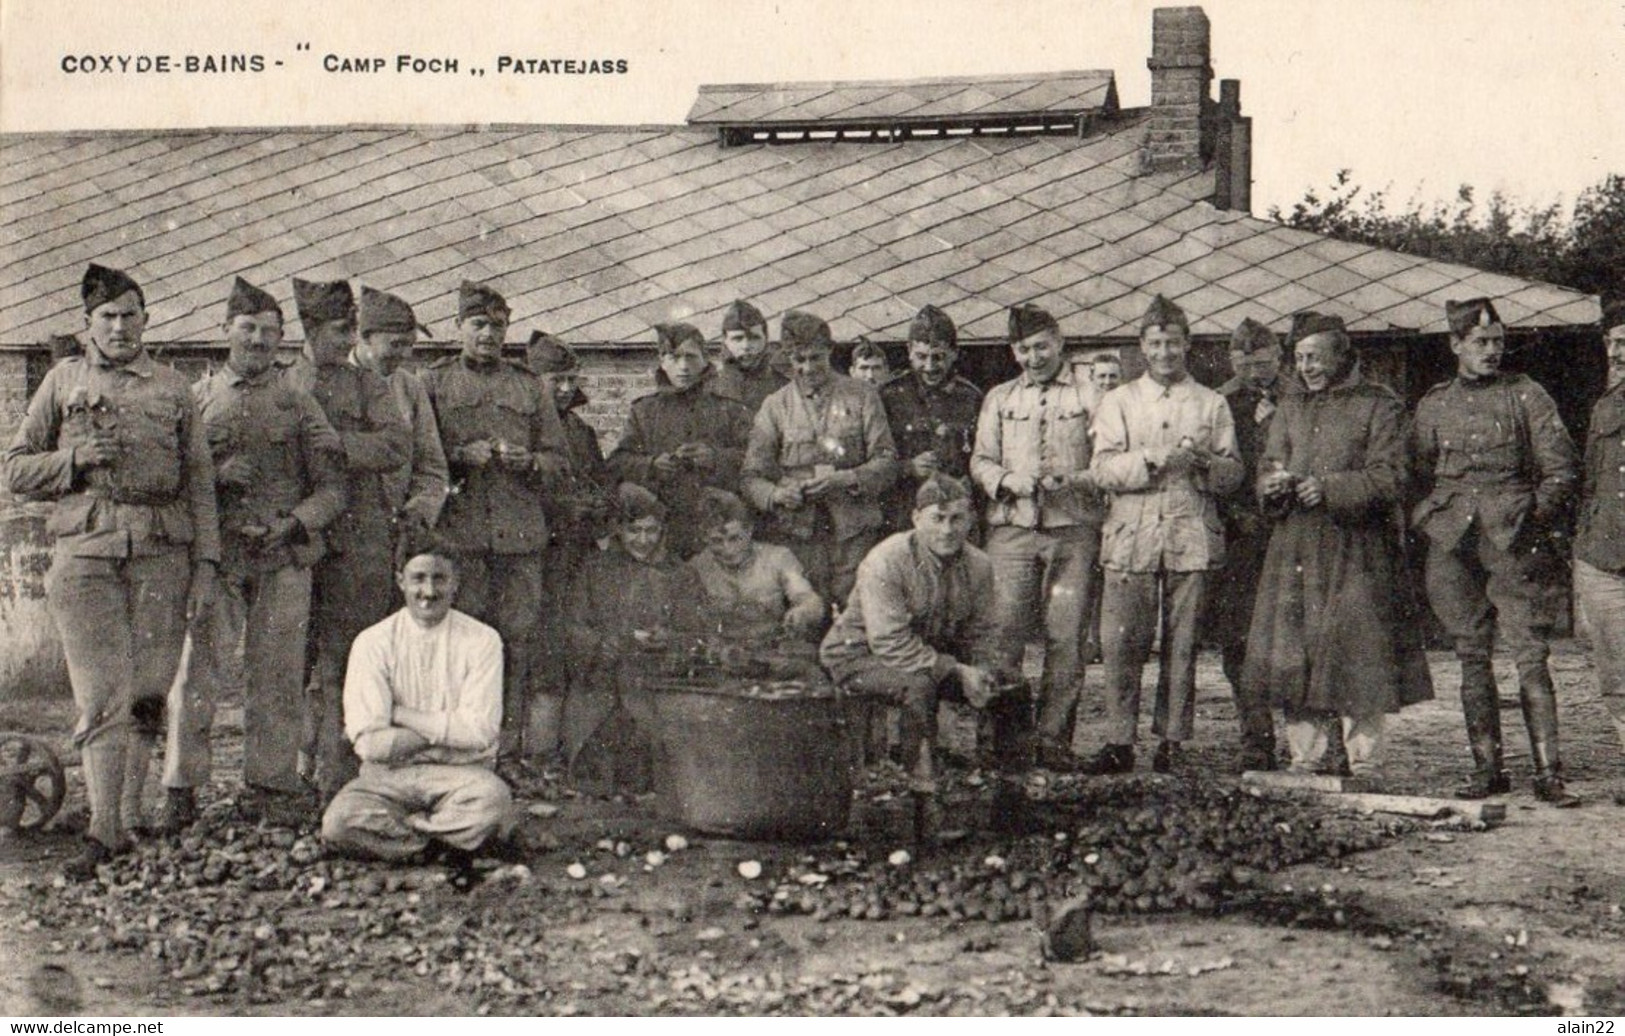 Coxyde-Bains-" Camp Foch" Patatejass. Pub Patissiers Bruxelleois Au Dos. - Koksijde